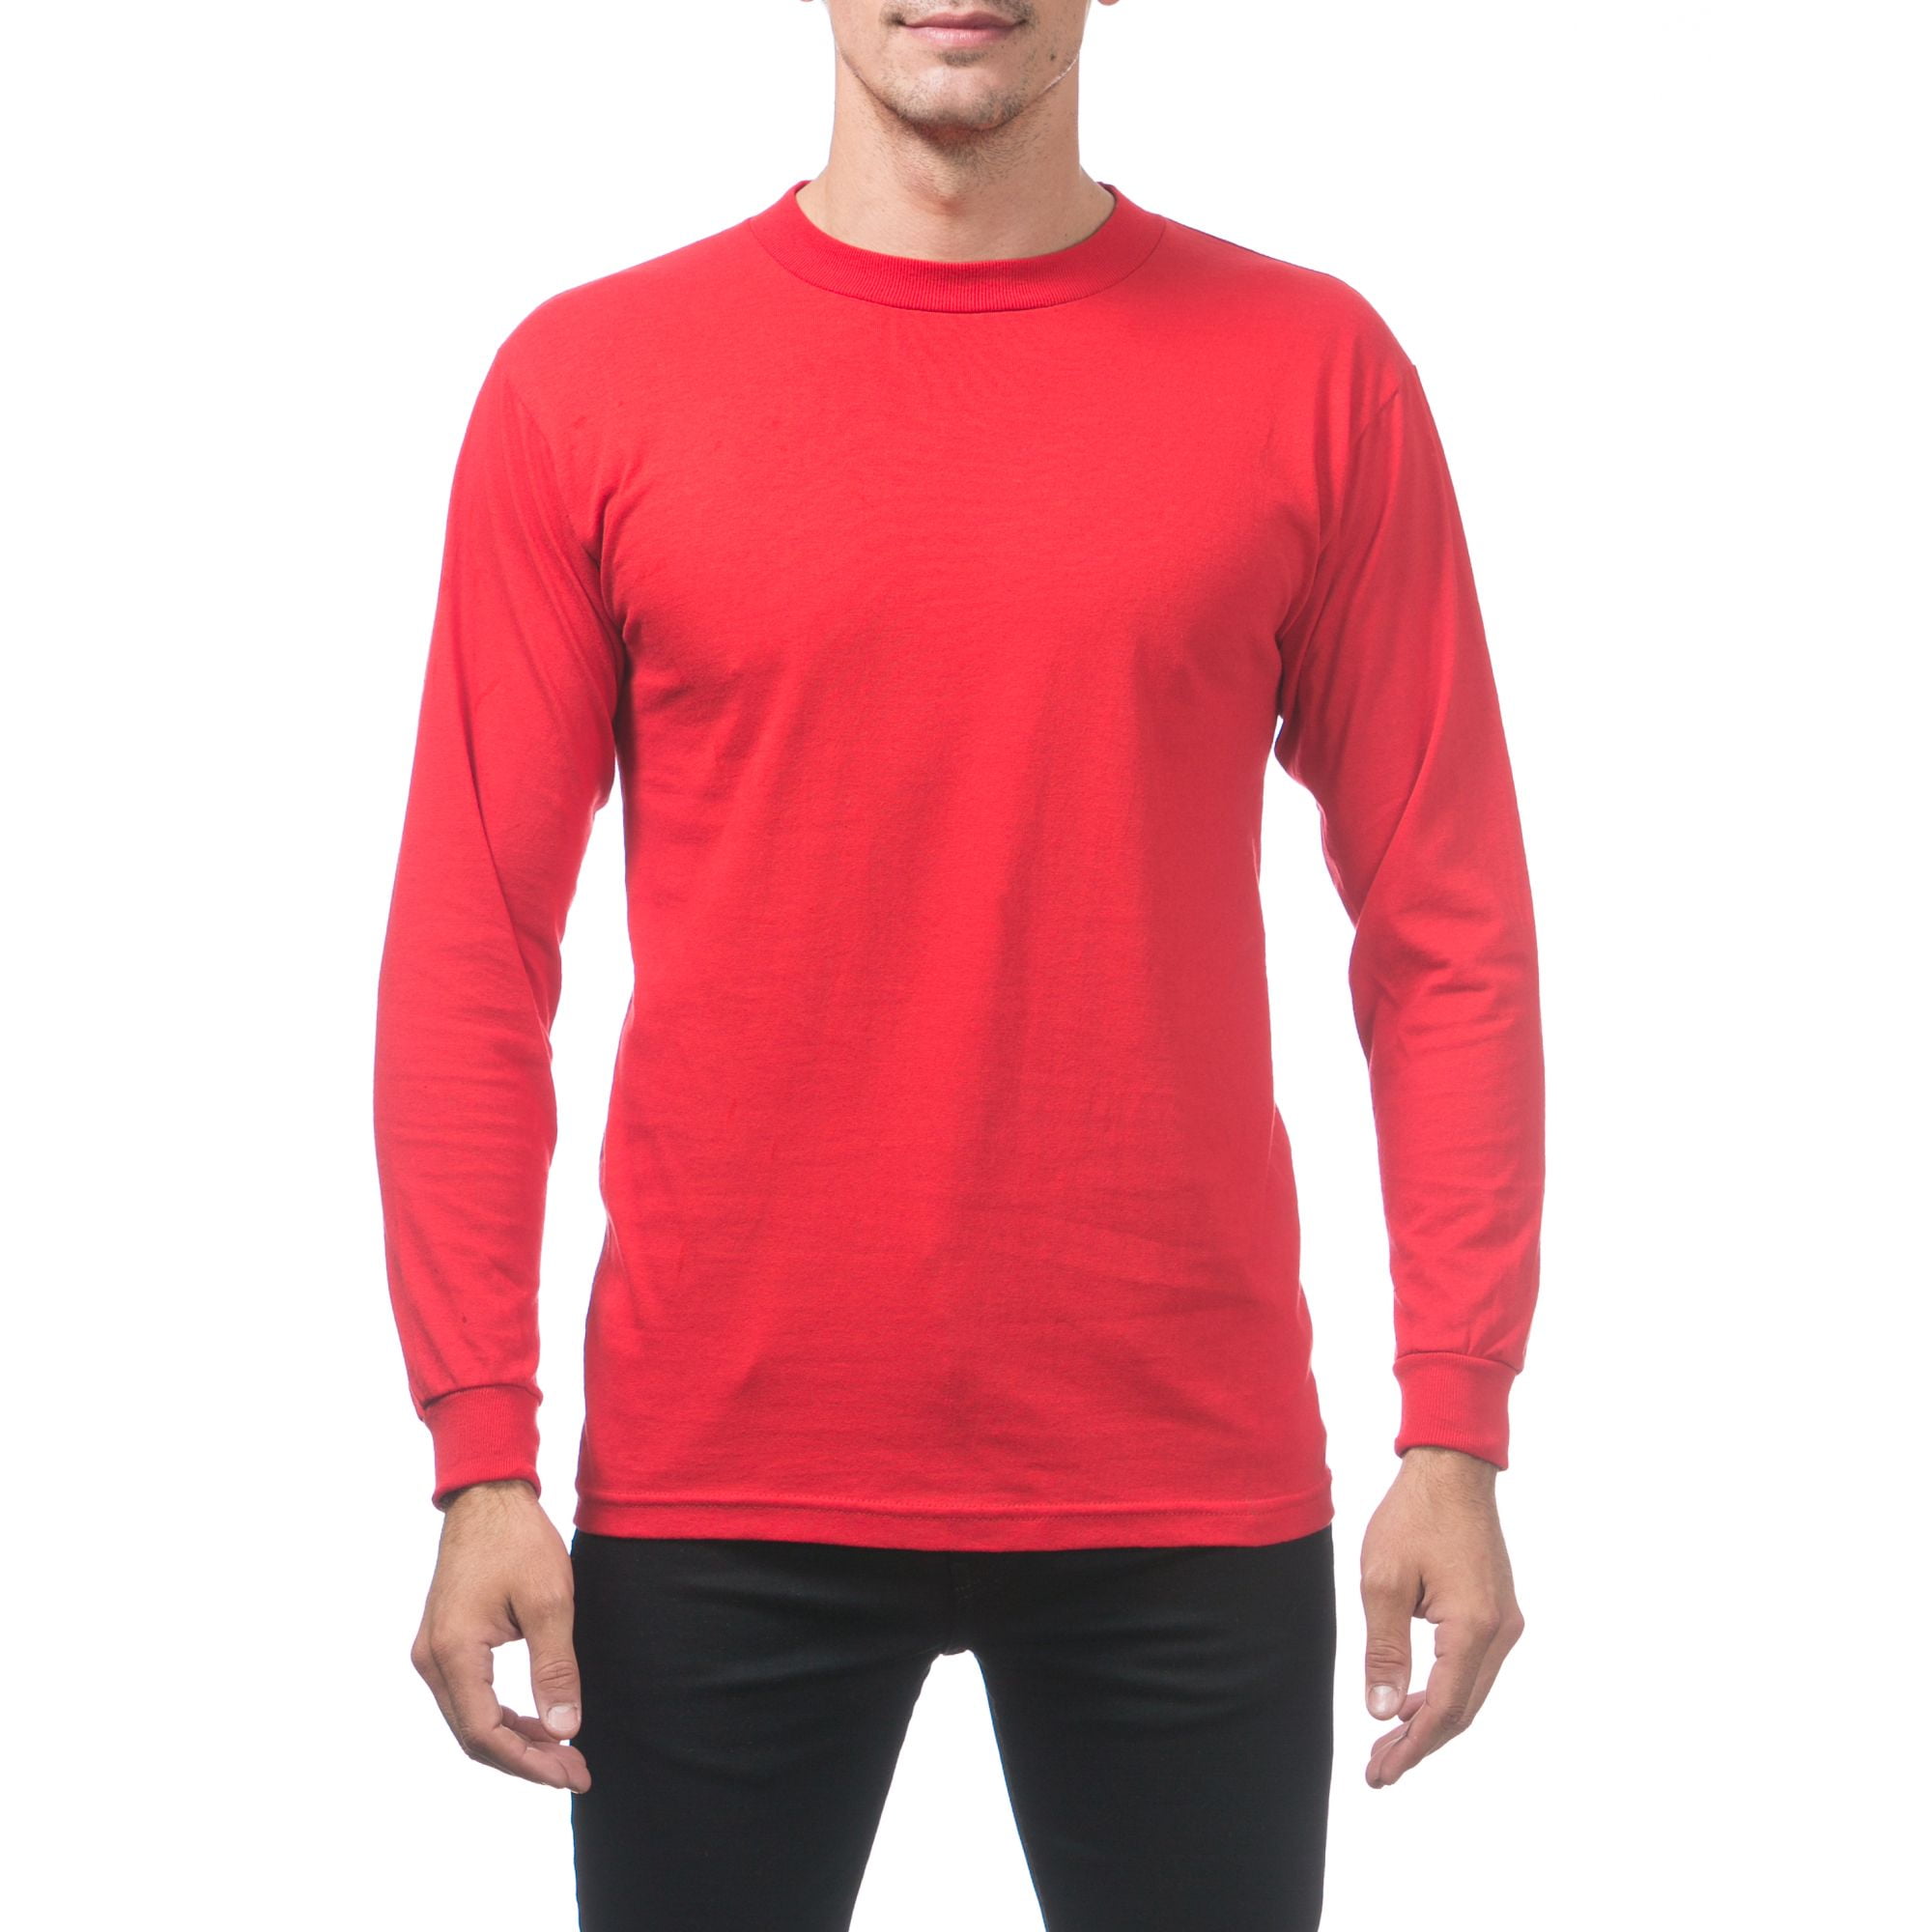 long red shirt